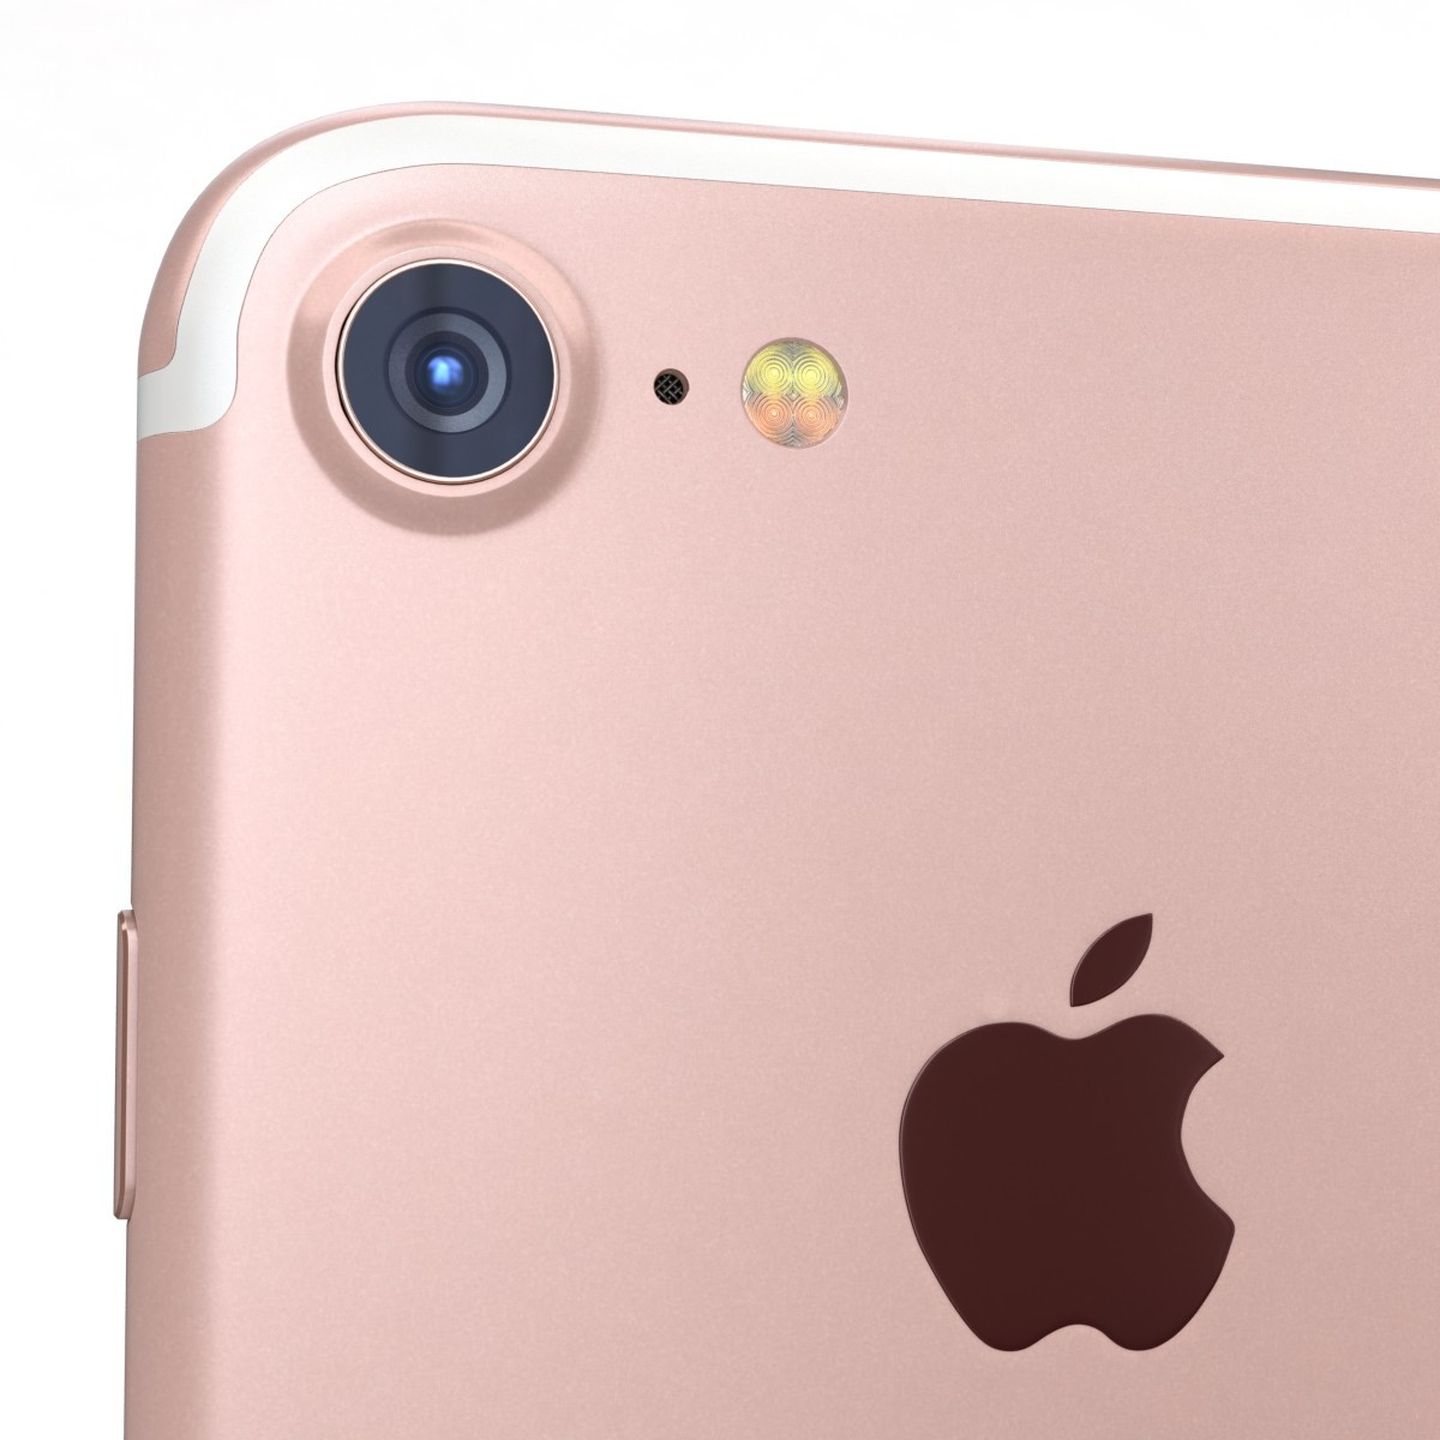 Айфон 7 розовый. Iphone 7 Rose Gold. Iphone 7 Plus Rose Gold. Iphone 7 Pink Gold. 7 Apple iphone Pink.